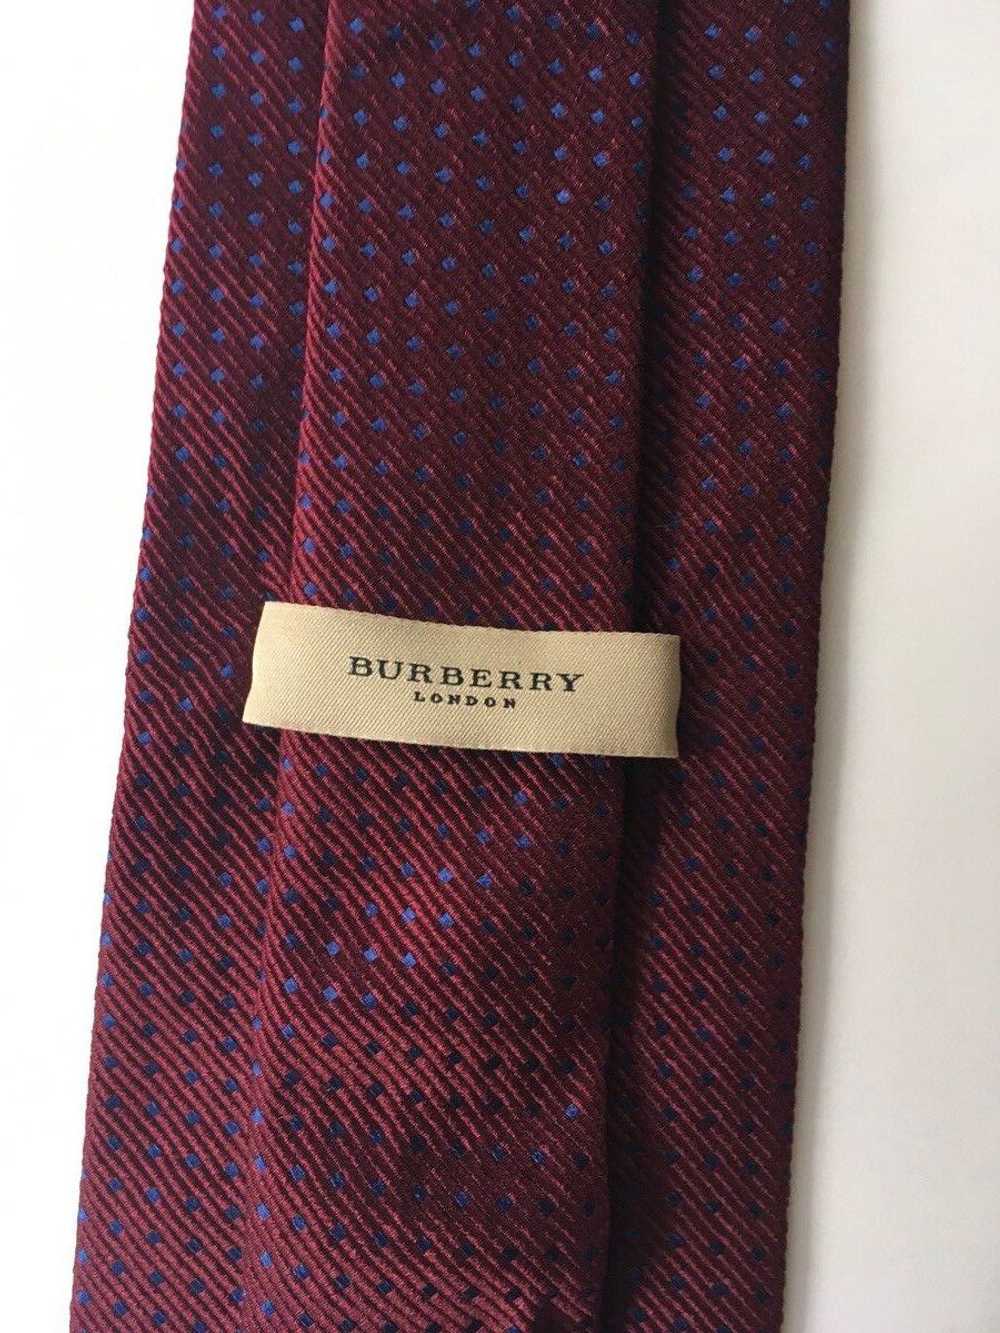 Burberry Burberry Italian made silk tie - image 4